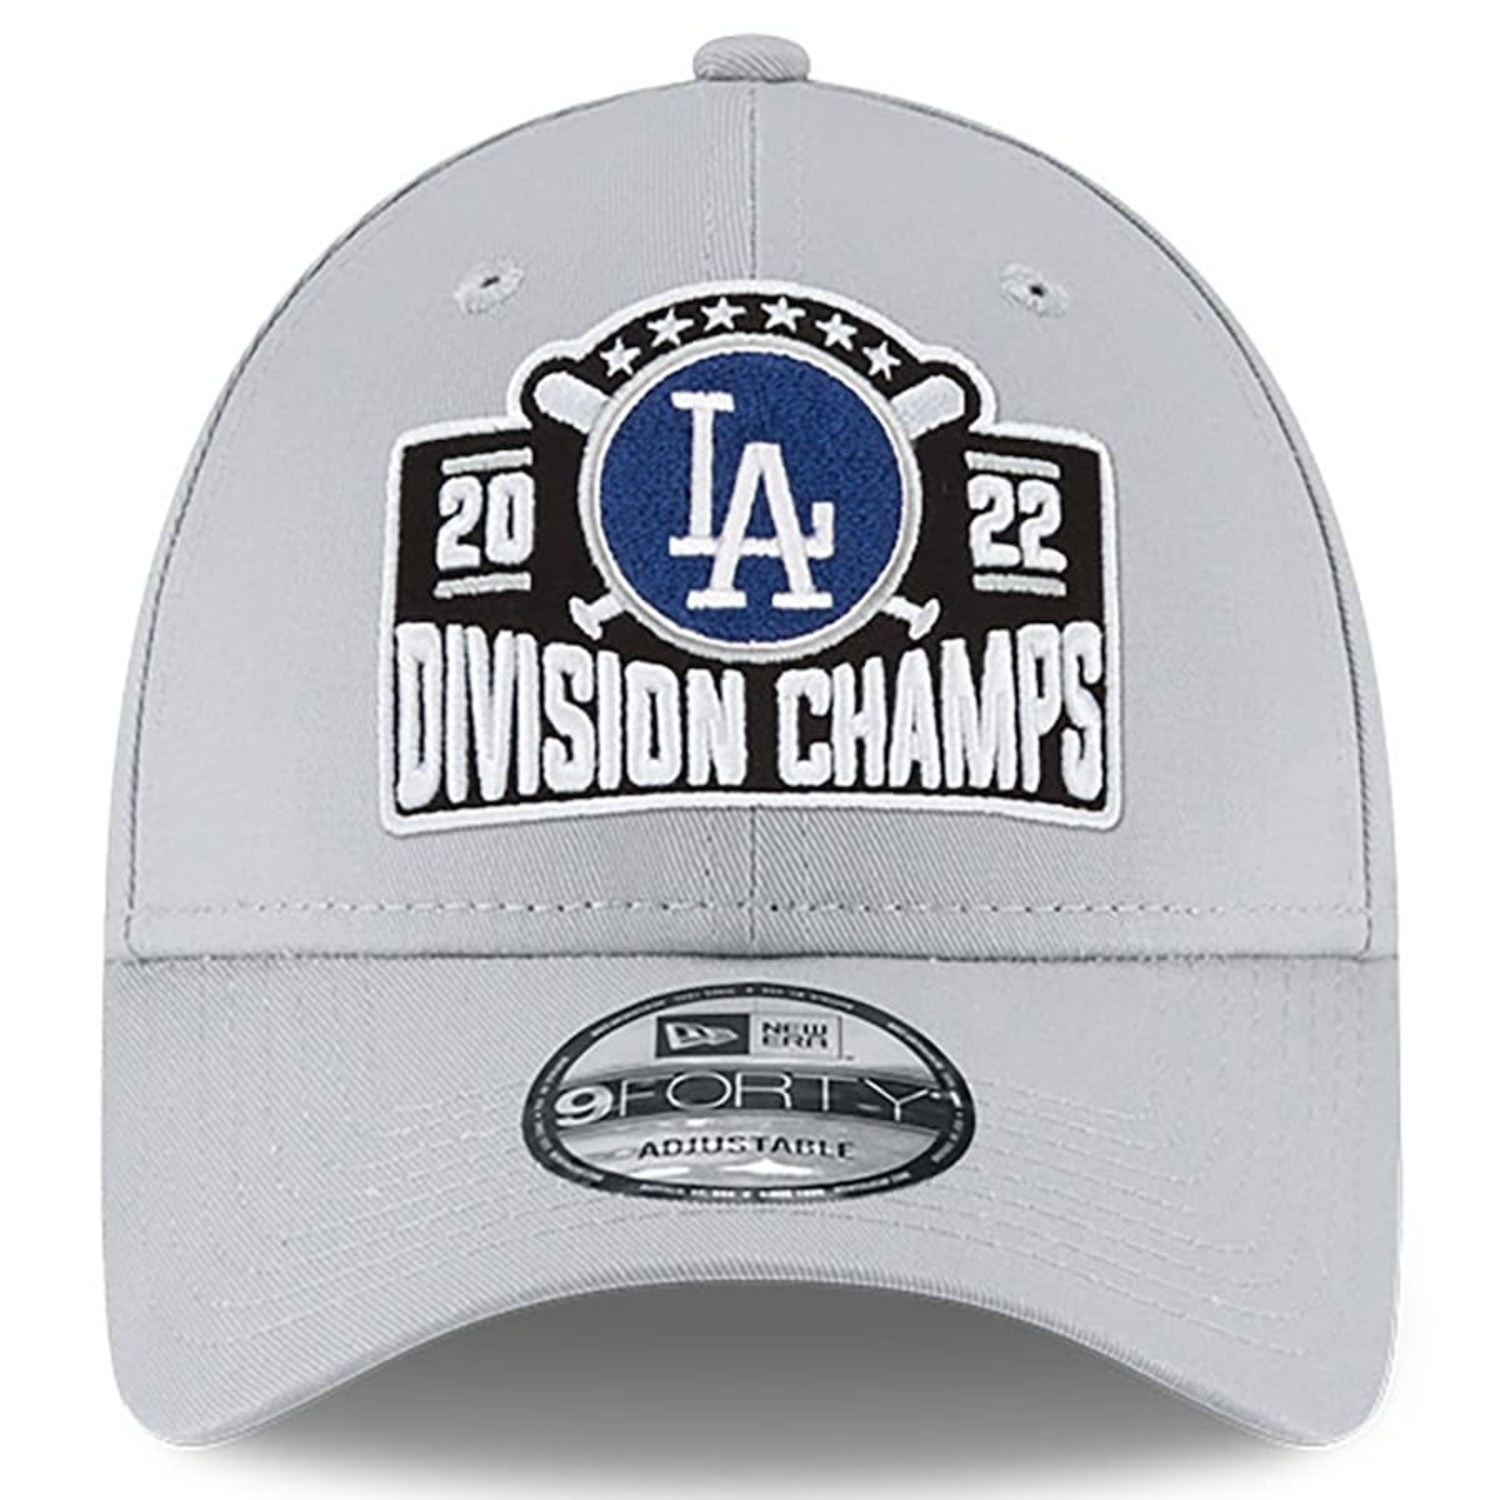 Los Angeles Dodgers New Era Historical Championship T-Shirt - White